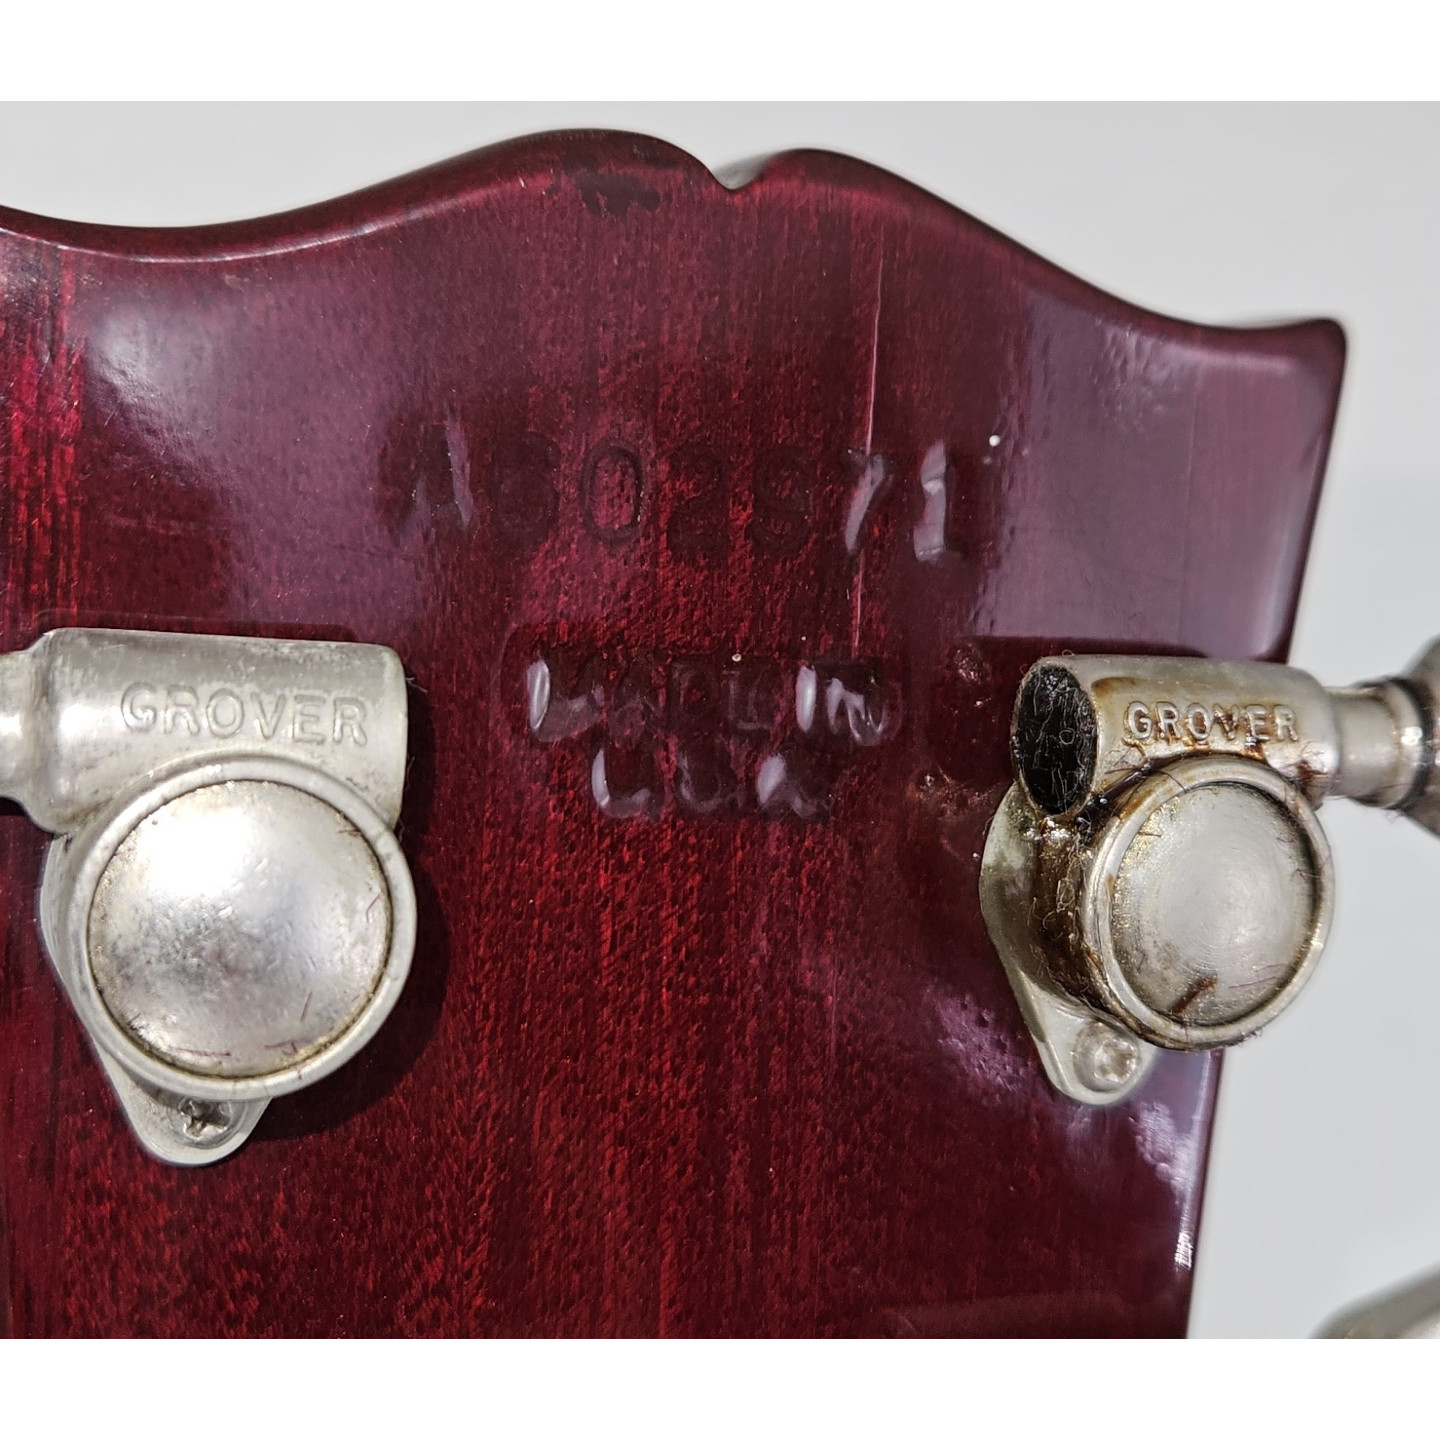 1974 Gibson Hummingbird Custom Natural Vintage Dreadnought Acoustic Guitar